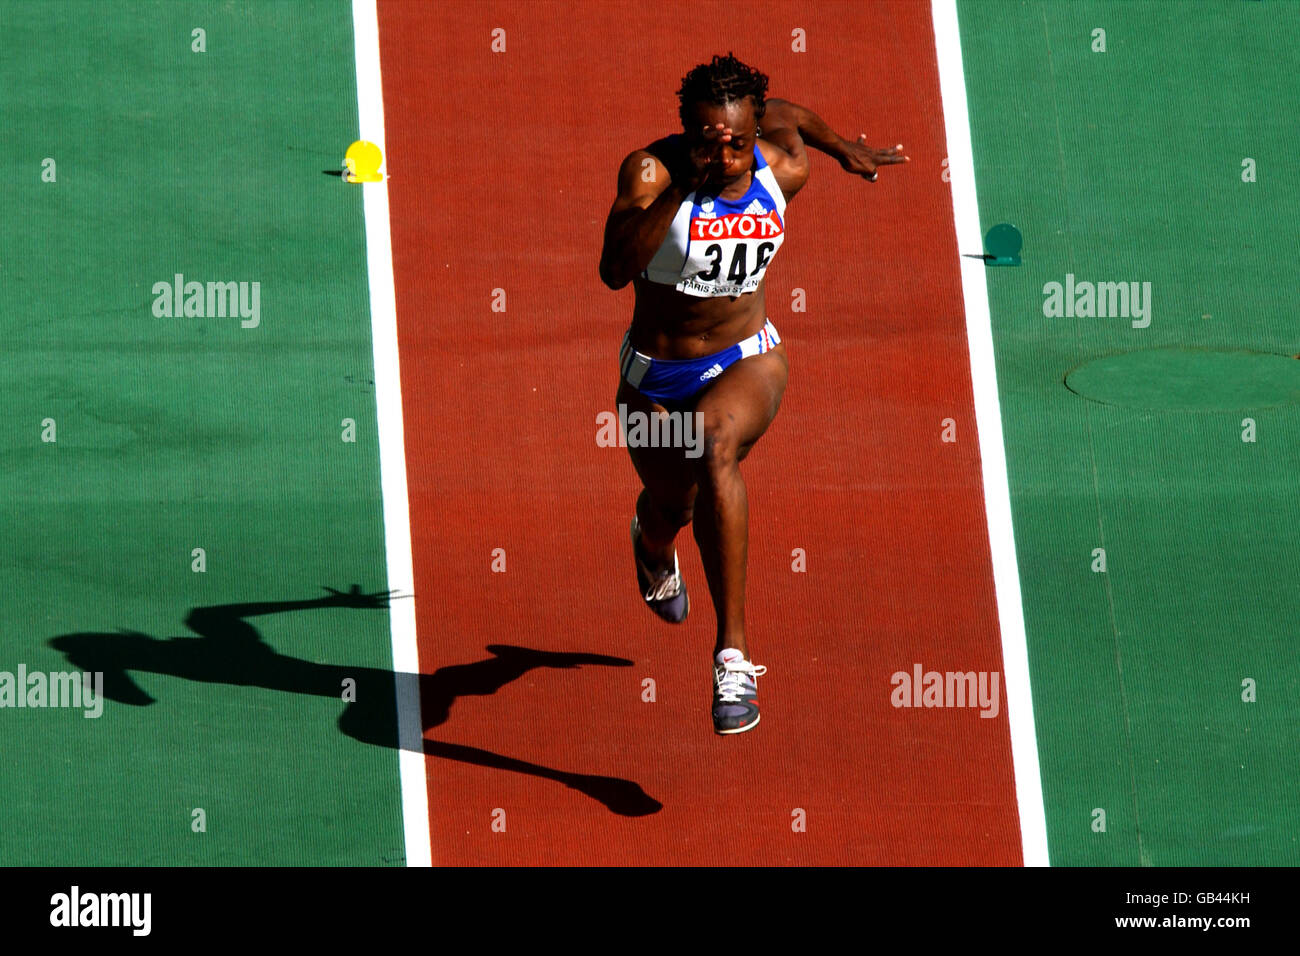 Athletics - IAAF World Athletics Championships - Paris 2003 - Women's Heptathlon Stock Photo